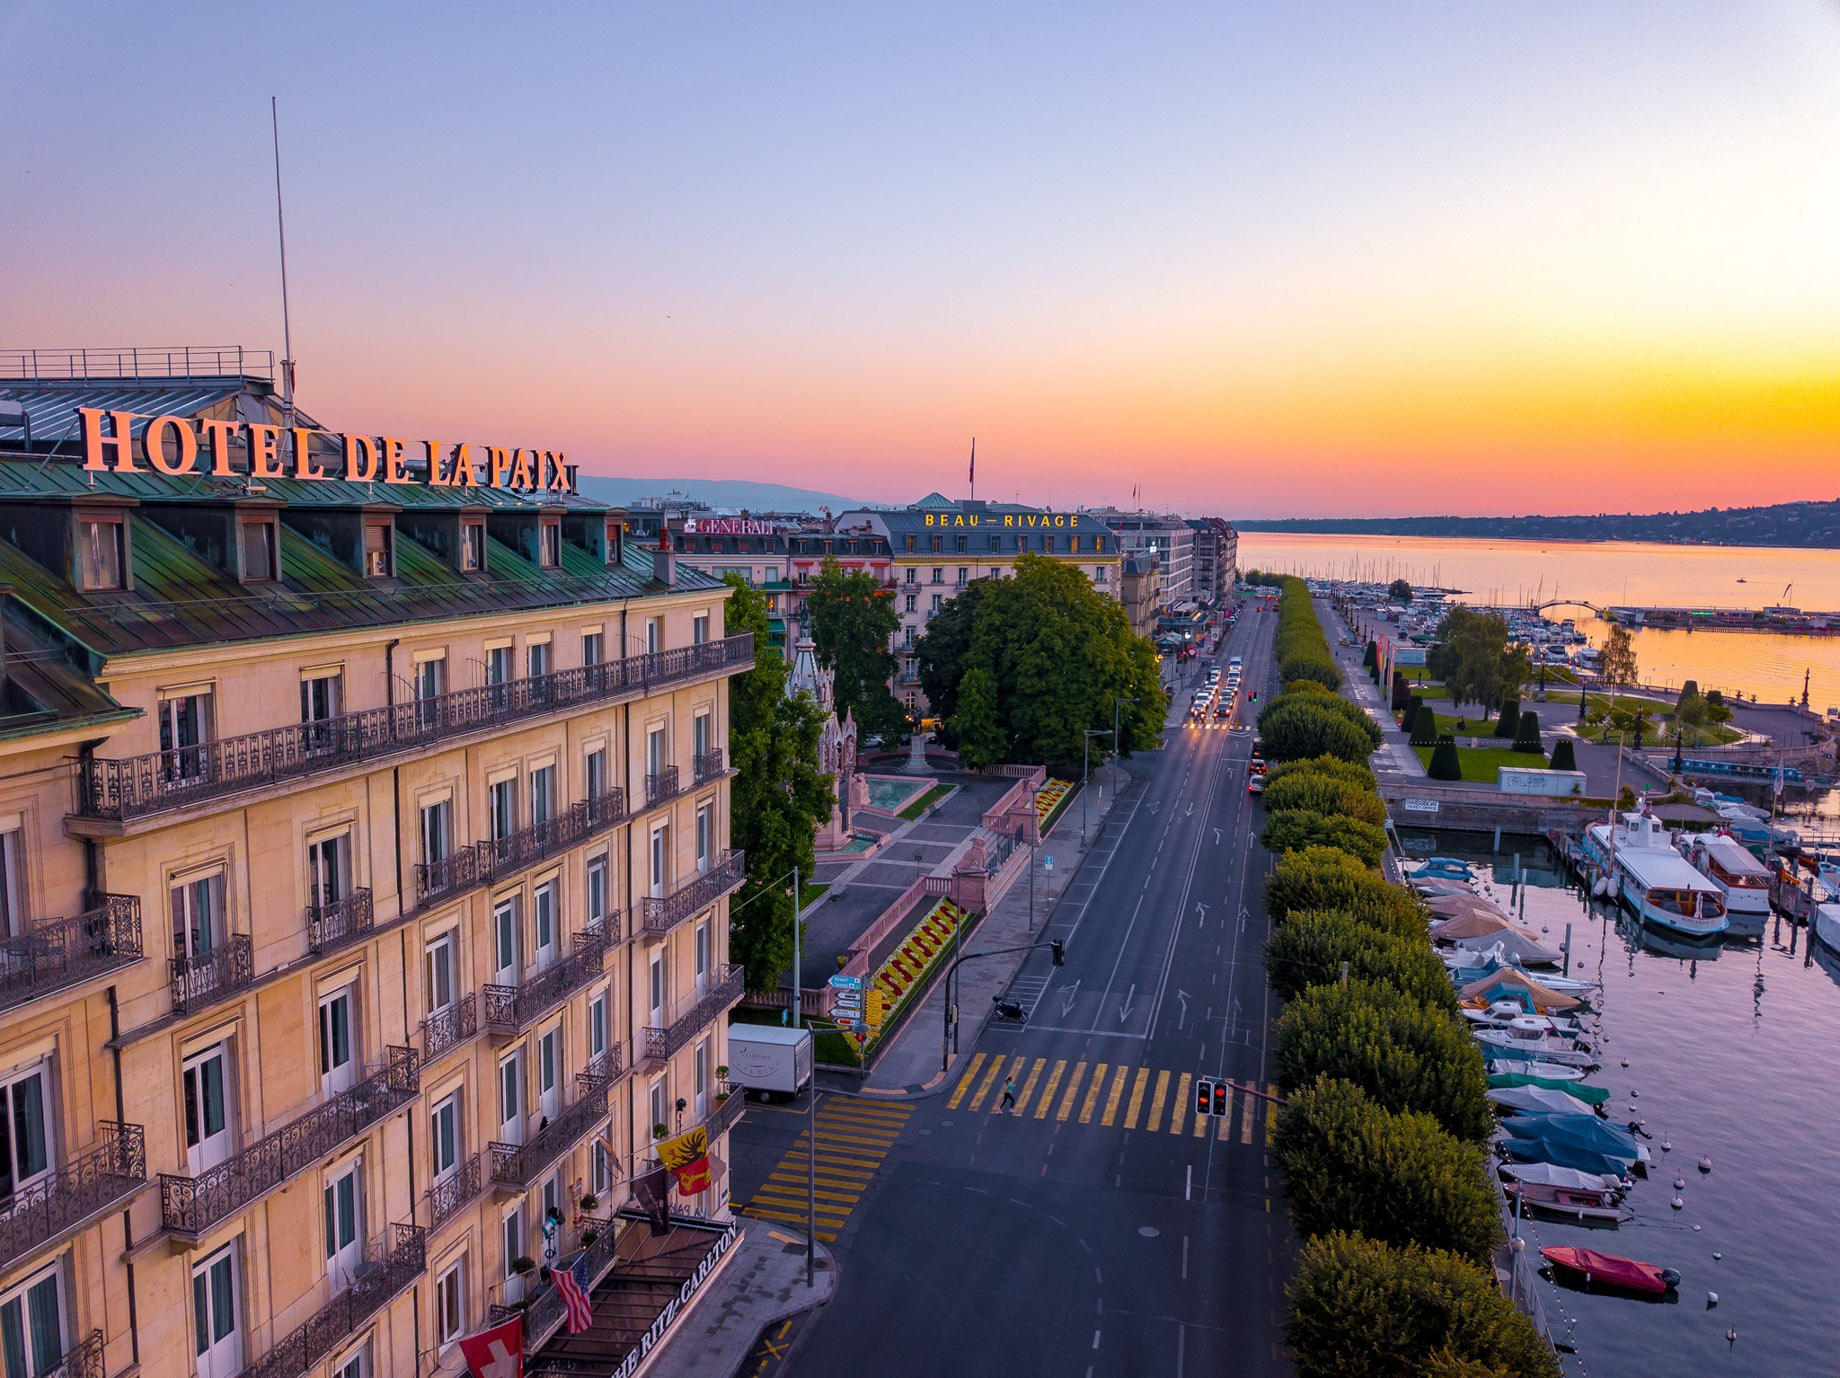 The Ritz-Carlton Hotel de la Paix, Geneva - Geneva, Switzerland - Hotel Exterior Lakefront Aerial Sunset